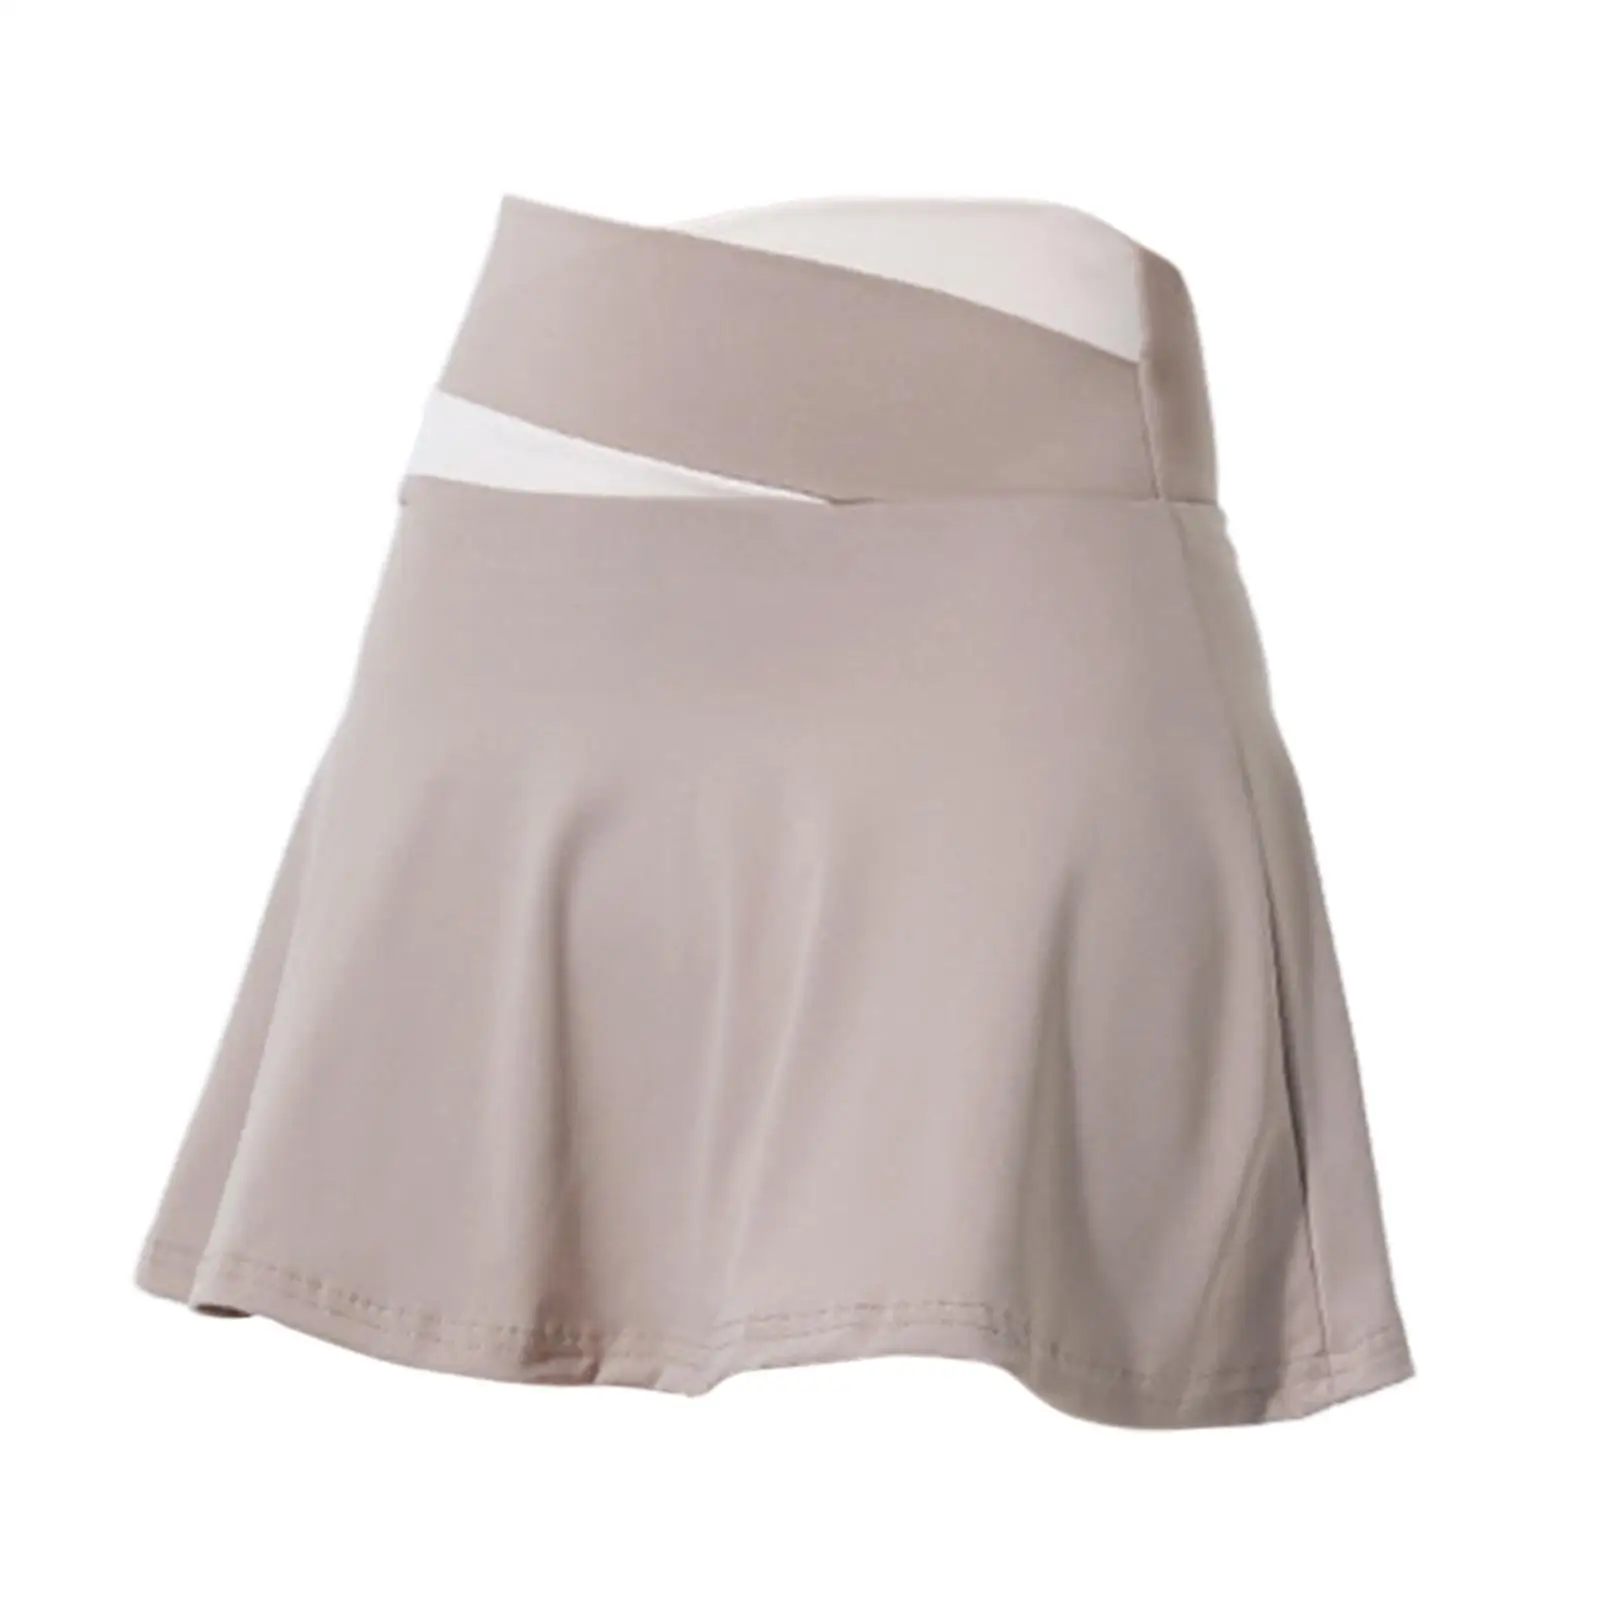 Tennis Skirts Short Skirts Anti Exposure Athletic Soft Badminton Skirts Golf Skorts Skirt for Running Yoga Tennis Fitness